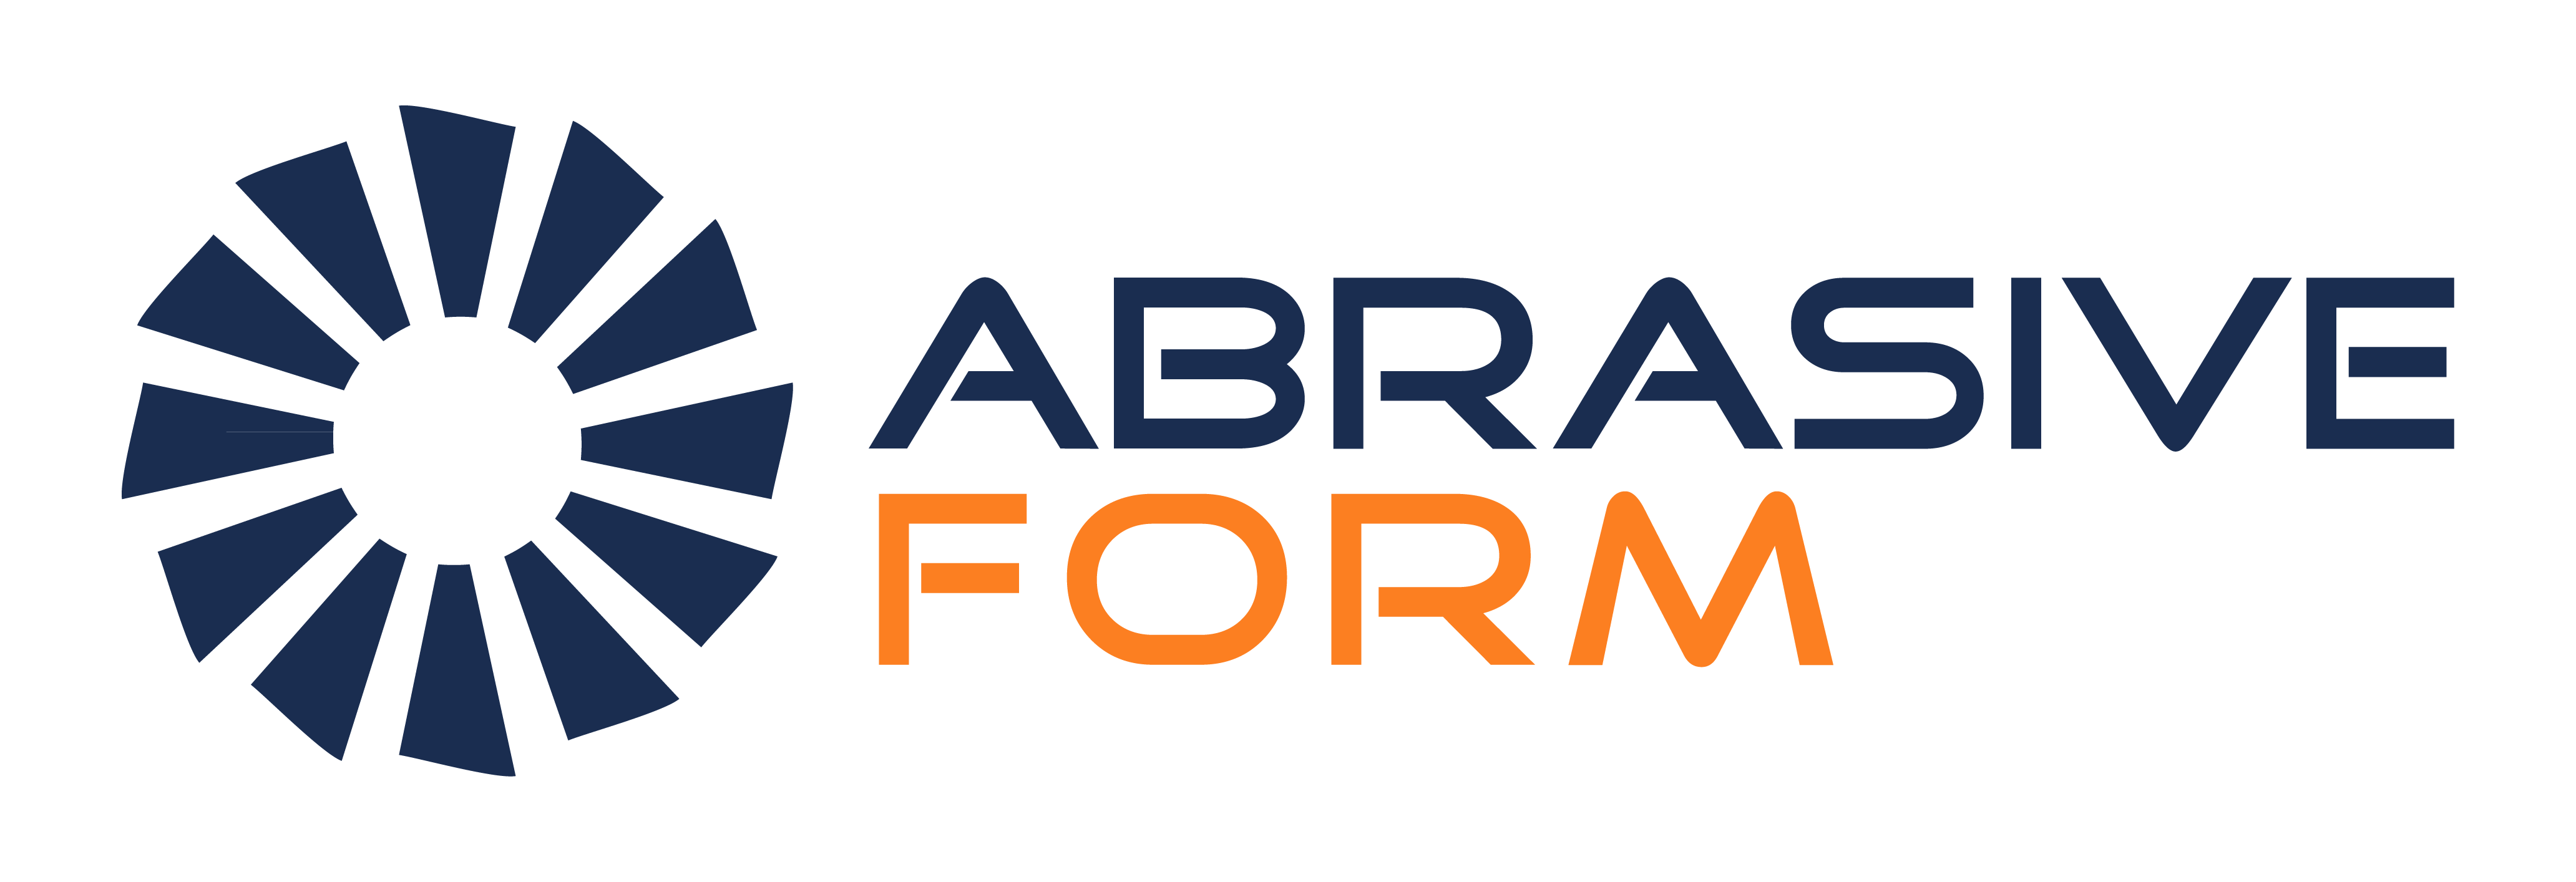 Abrasive Logo - logo - Abrasive Form